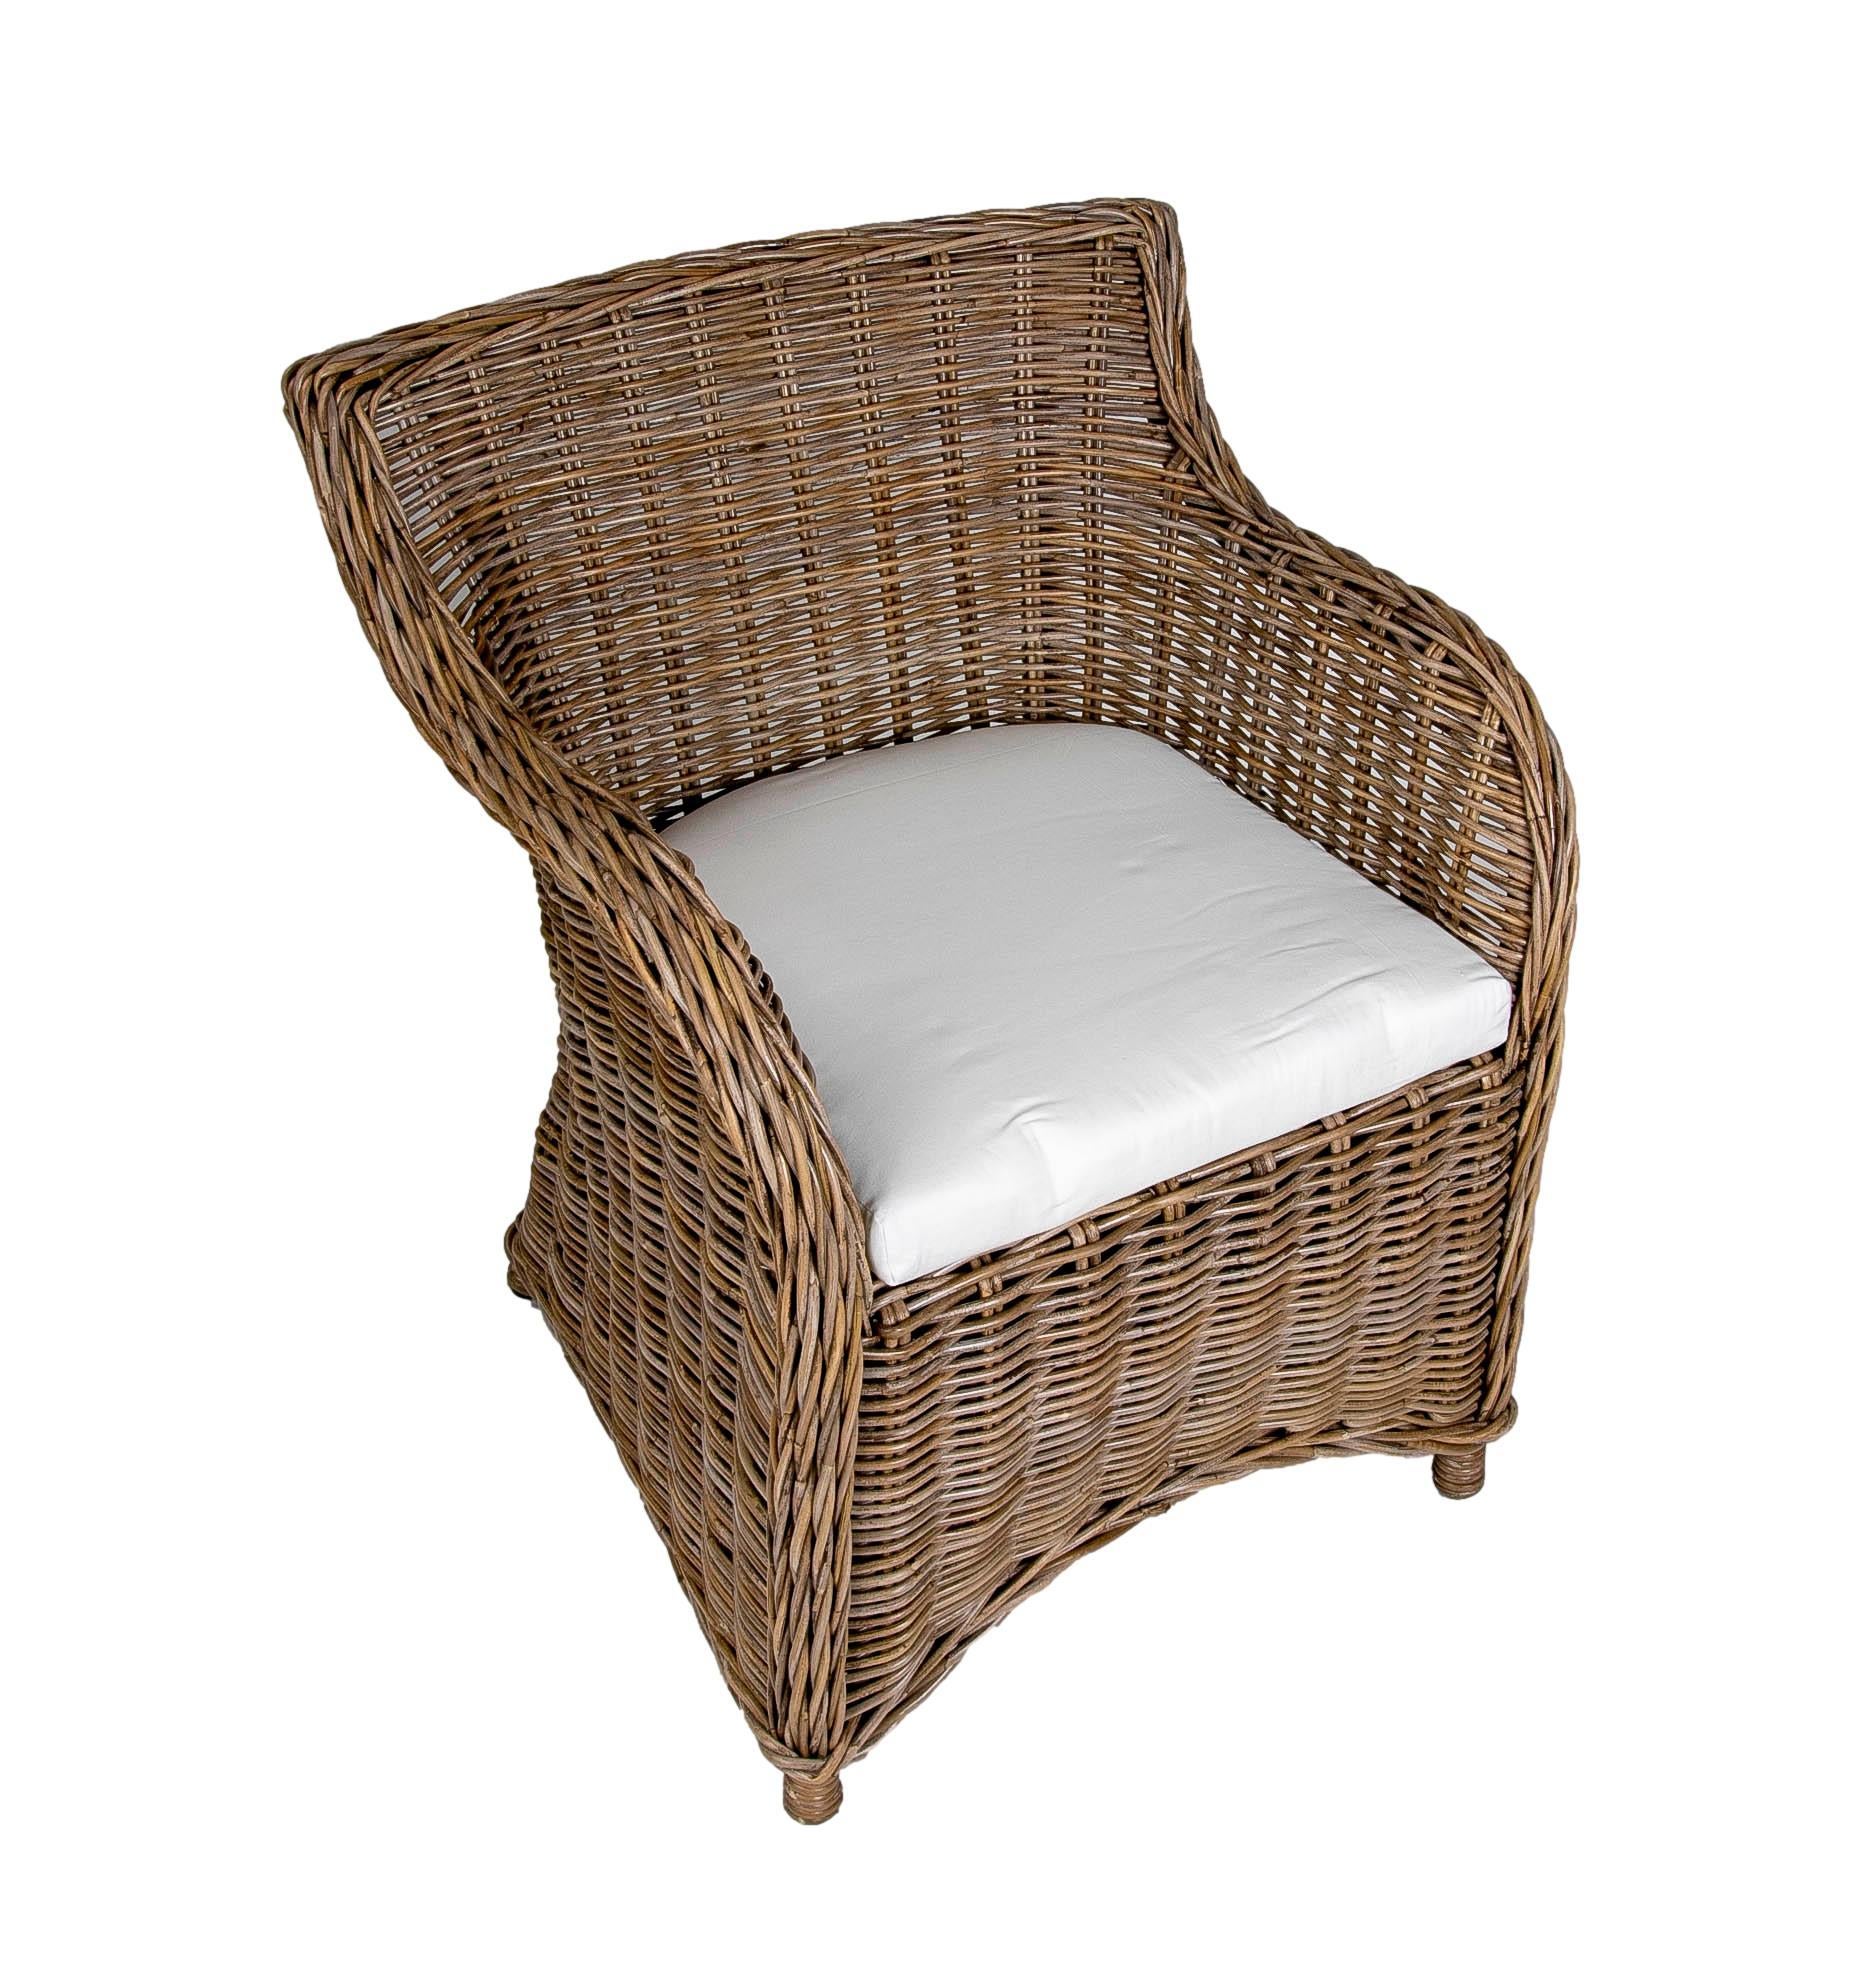 European  Rattan Garden Chair with Cushion in Greyish Tone For Sale